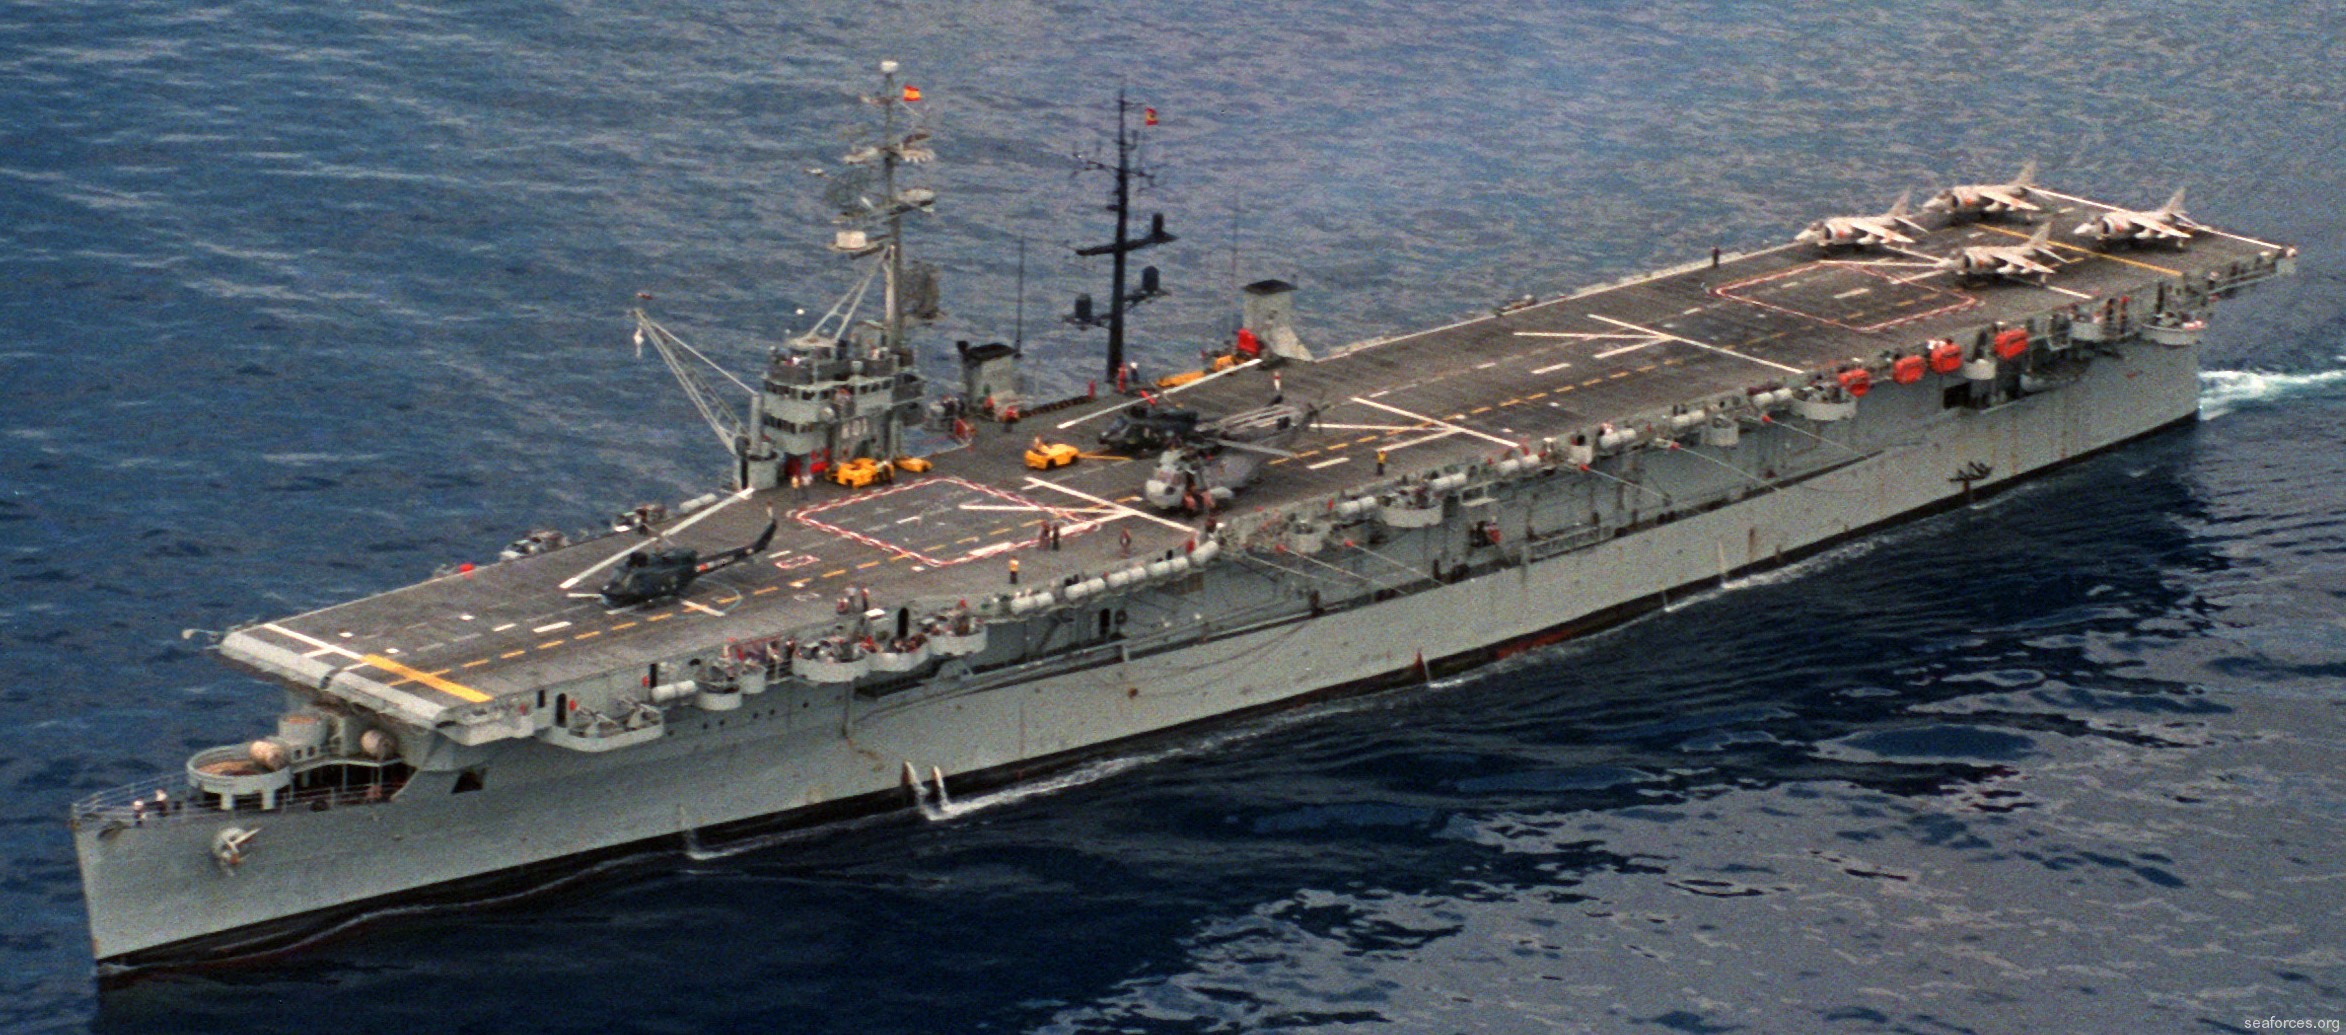 r-01 sps dedalo aircraft carrier spanish navy armada espanola 04x